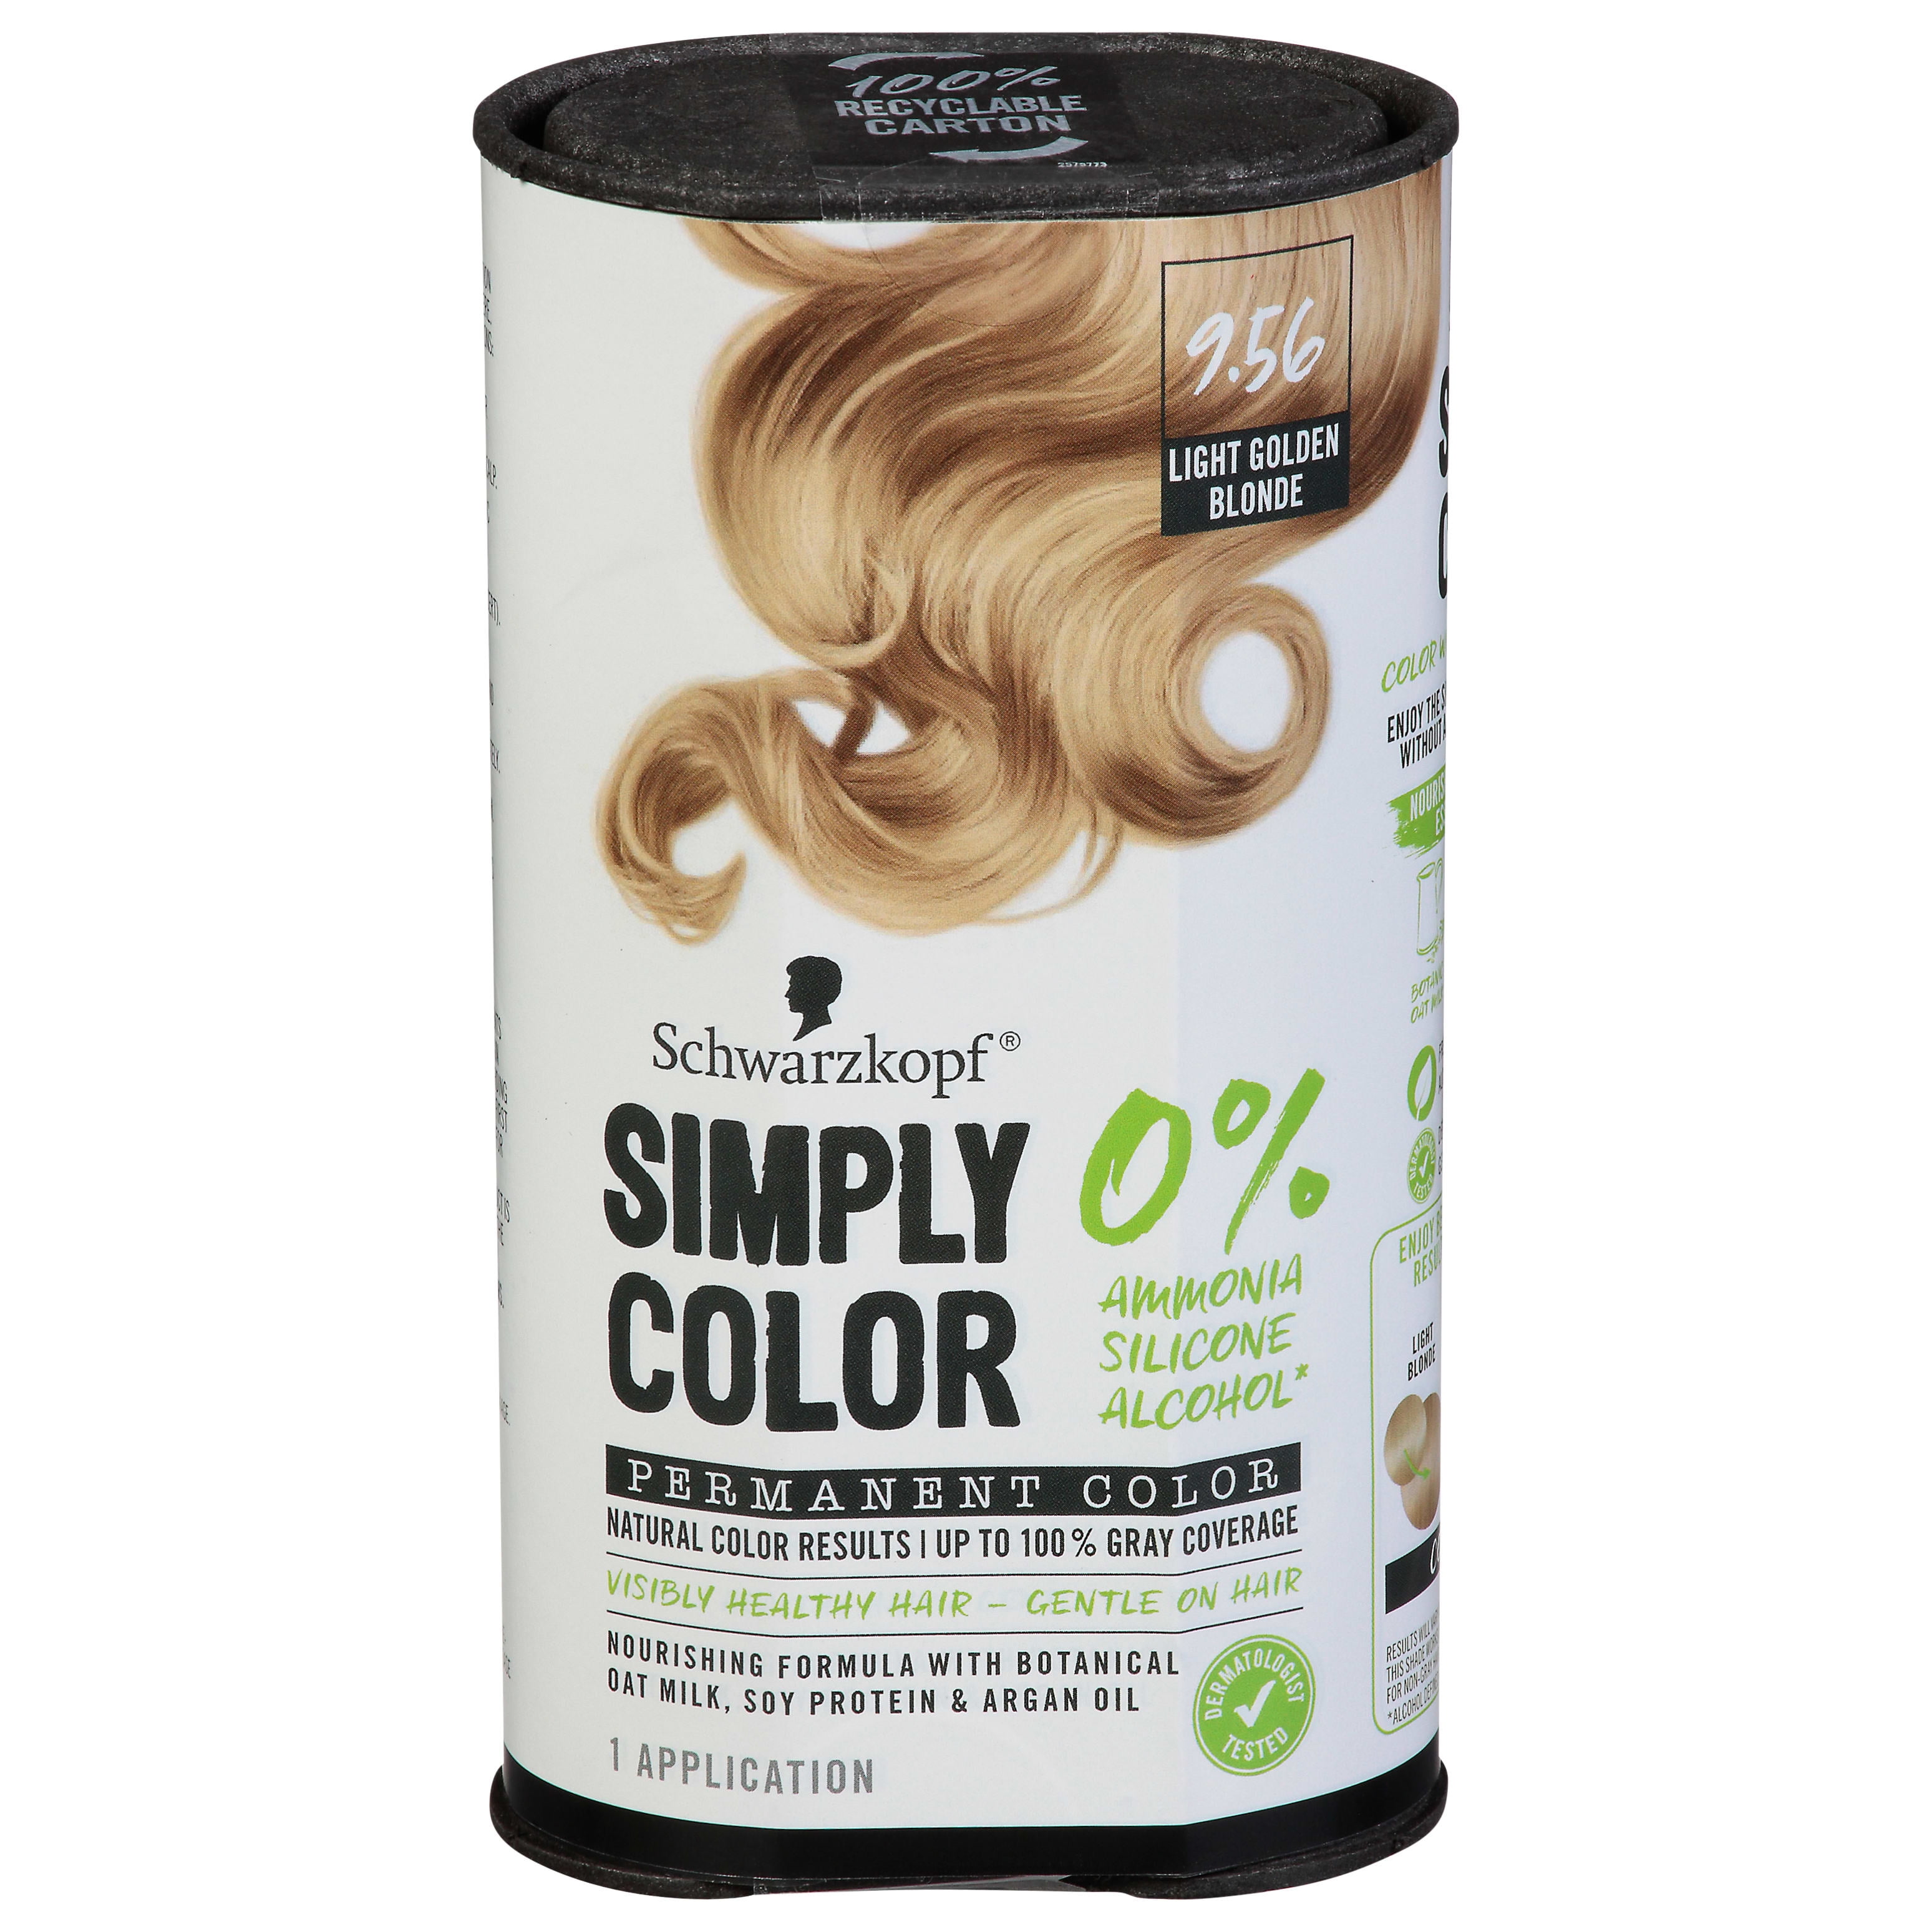 Schwarzkopf Simply Color Hair Color Cream, 9.56 Light Golden Blonde, Kit - Walmart.com